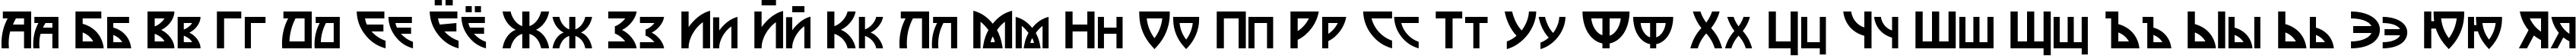 Пример написания русского алфавита шрифтом Postmodern One